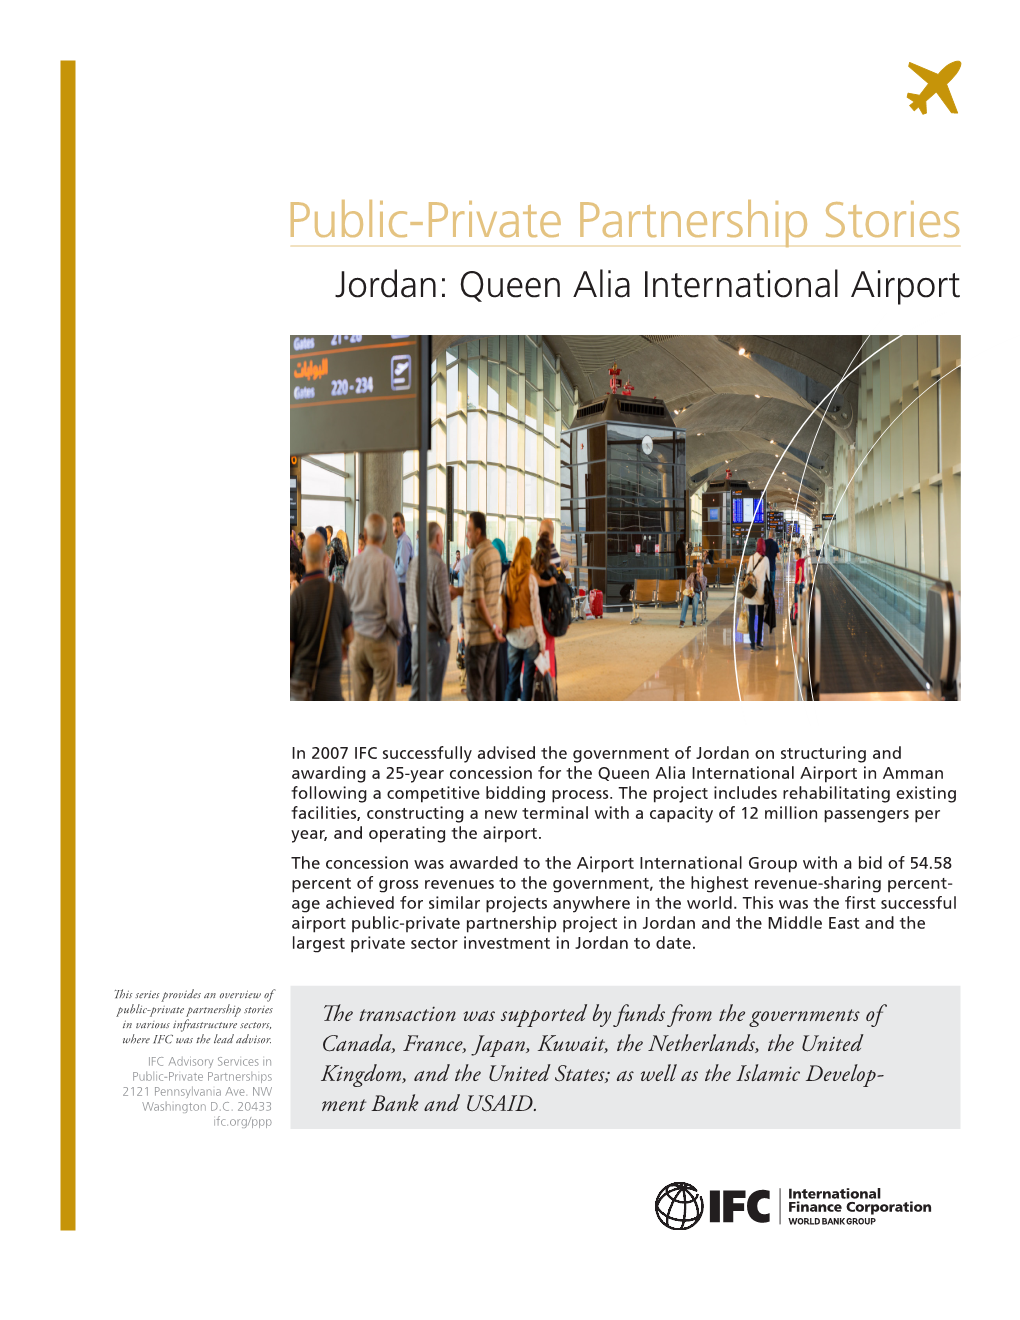 Public-Private Partnership Stories Jordan: Queen Alia International Airport